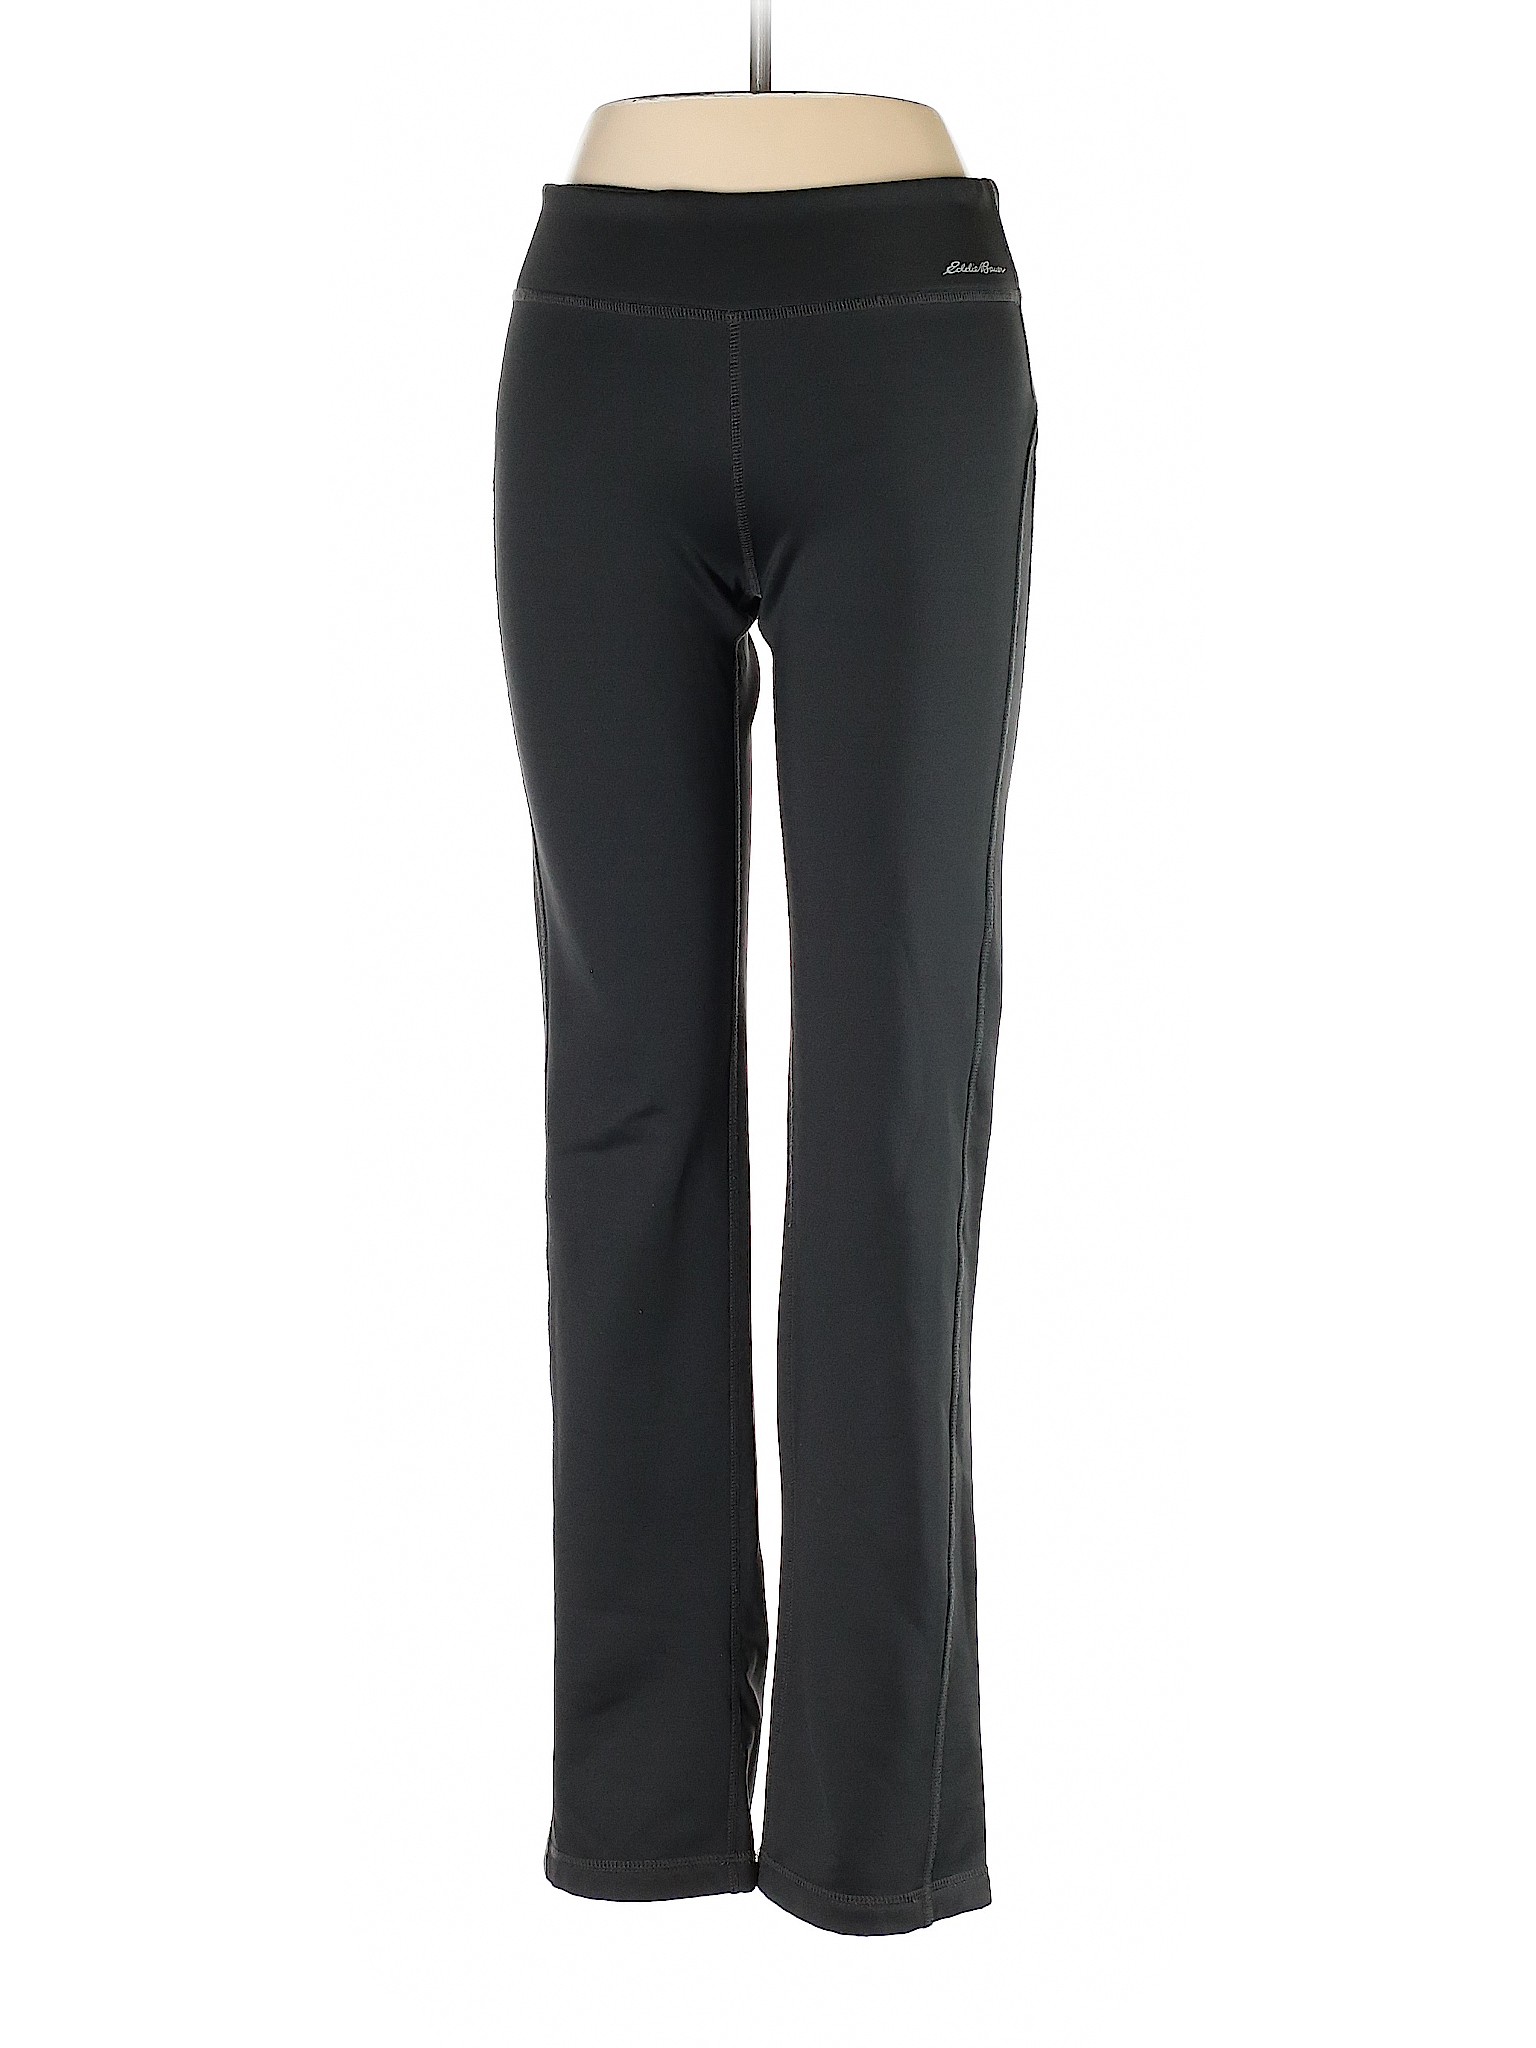 Eddie Bauer Women Black Active Pants XS | eBay